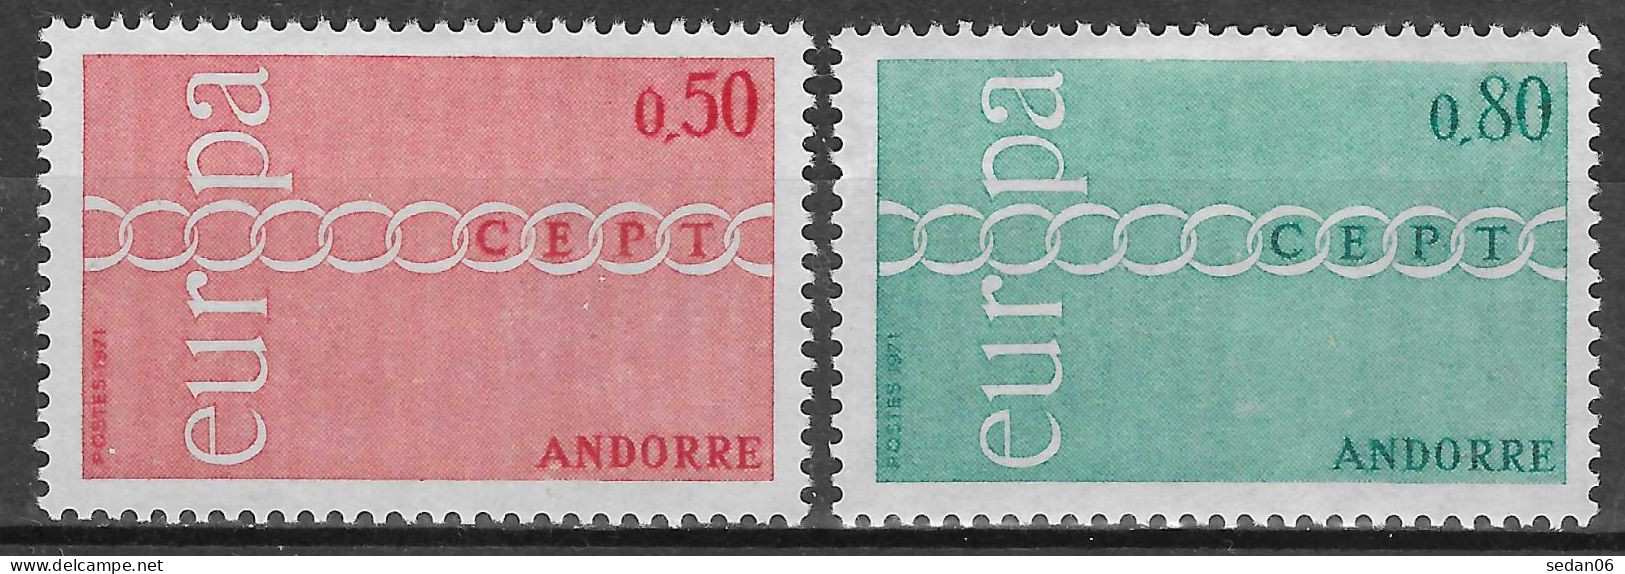 ANDORRE FRANCAIS N°212/213* (europa 1971) - COTE 50.00 € - 1971